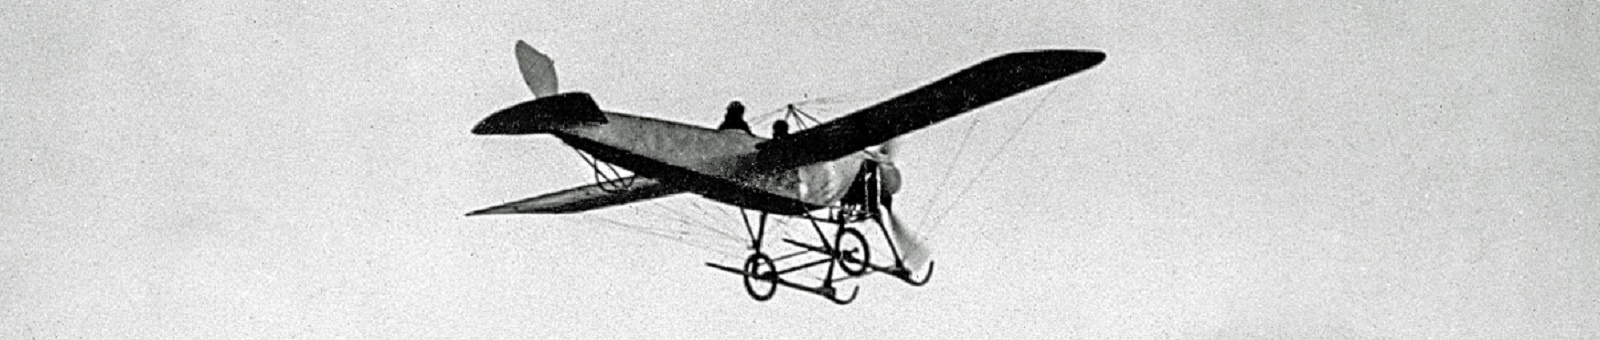 Bristol Prier Monoplanes